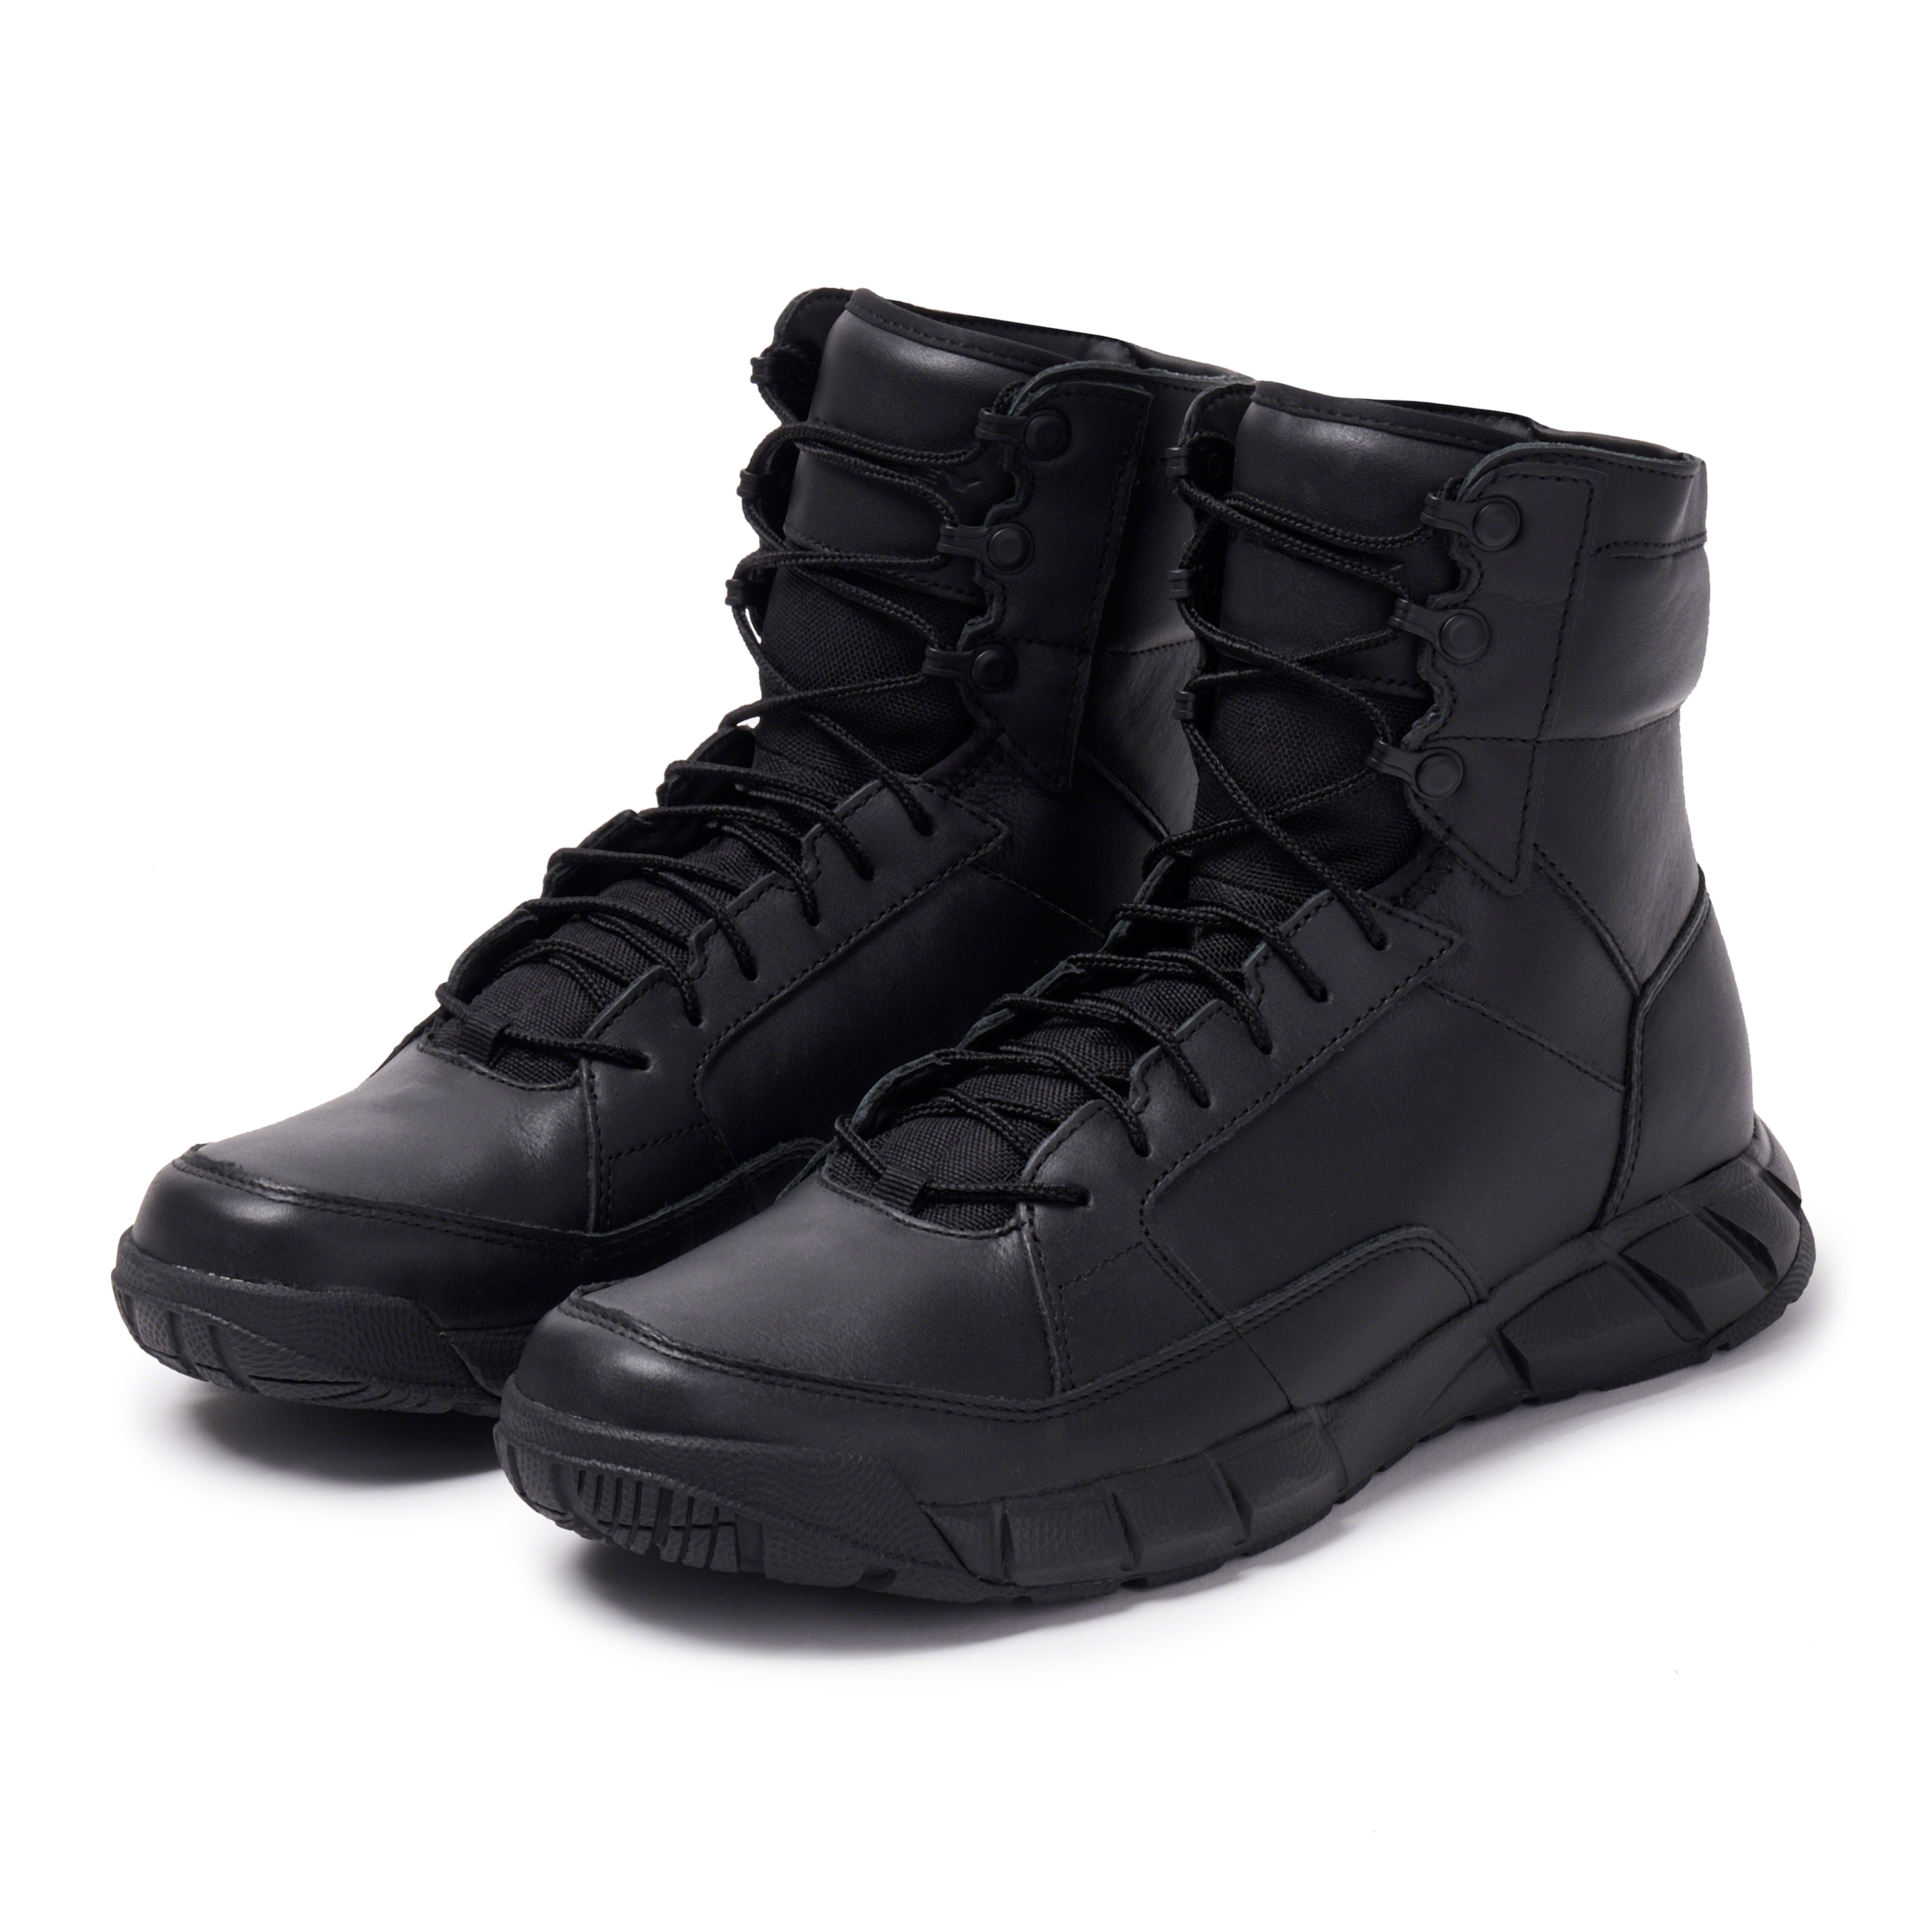 oakley 6 inch boots